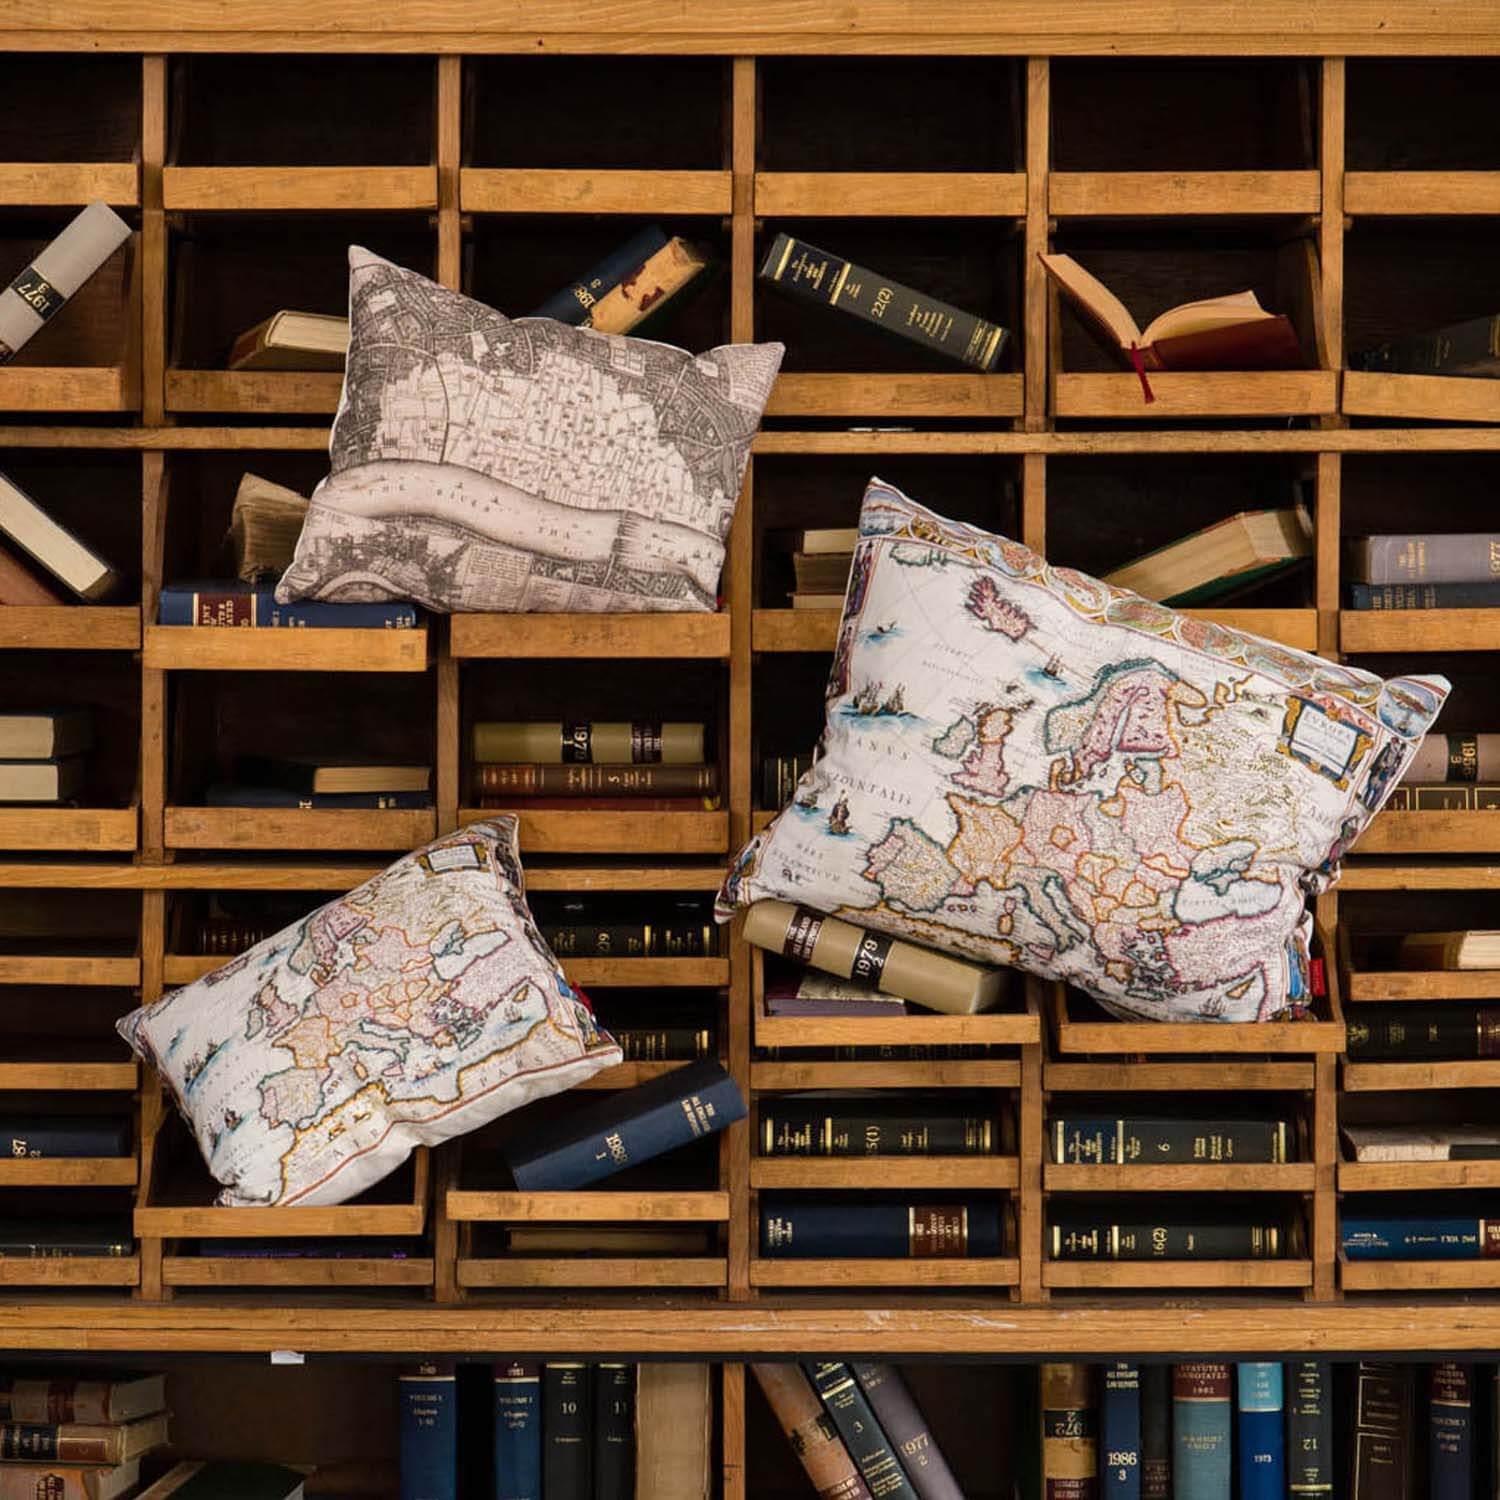 1568 Bristol Map - British Library Cushions - Handmade Cushions UK - WeLoveCushions